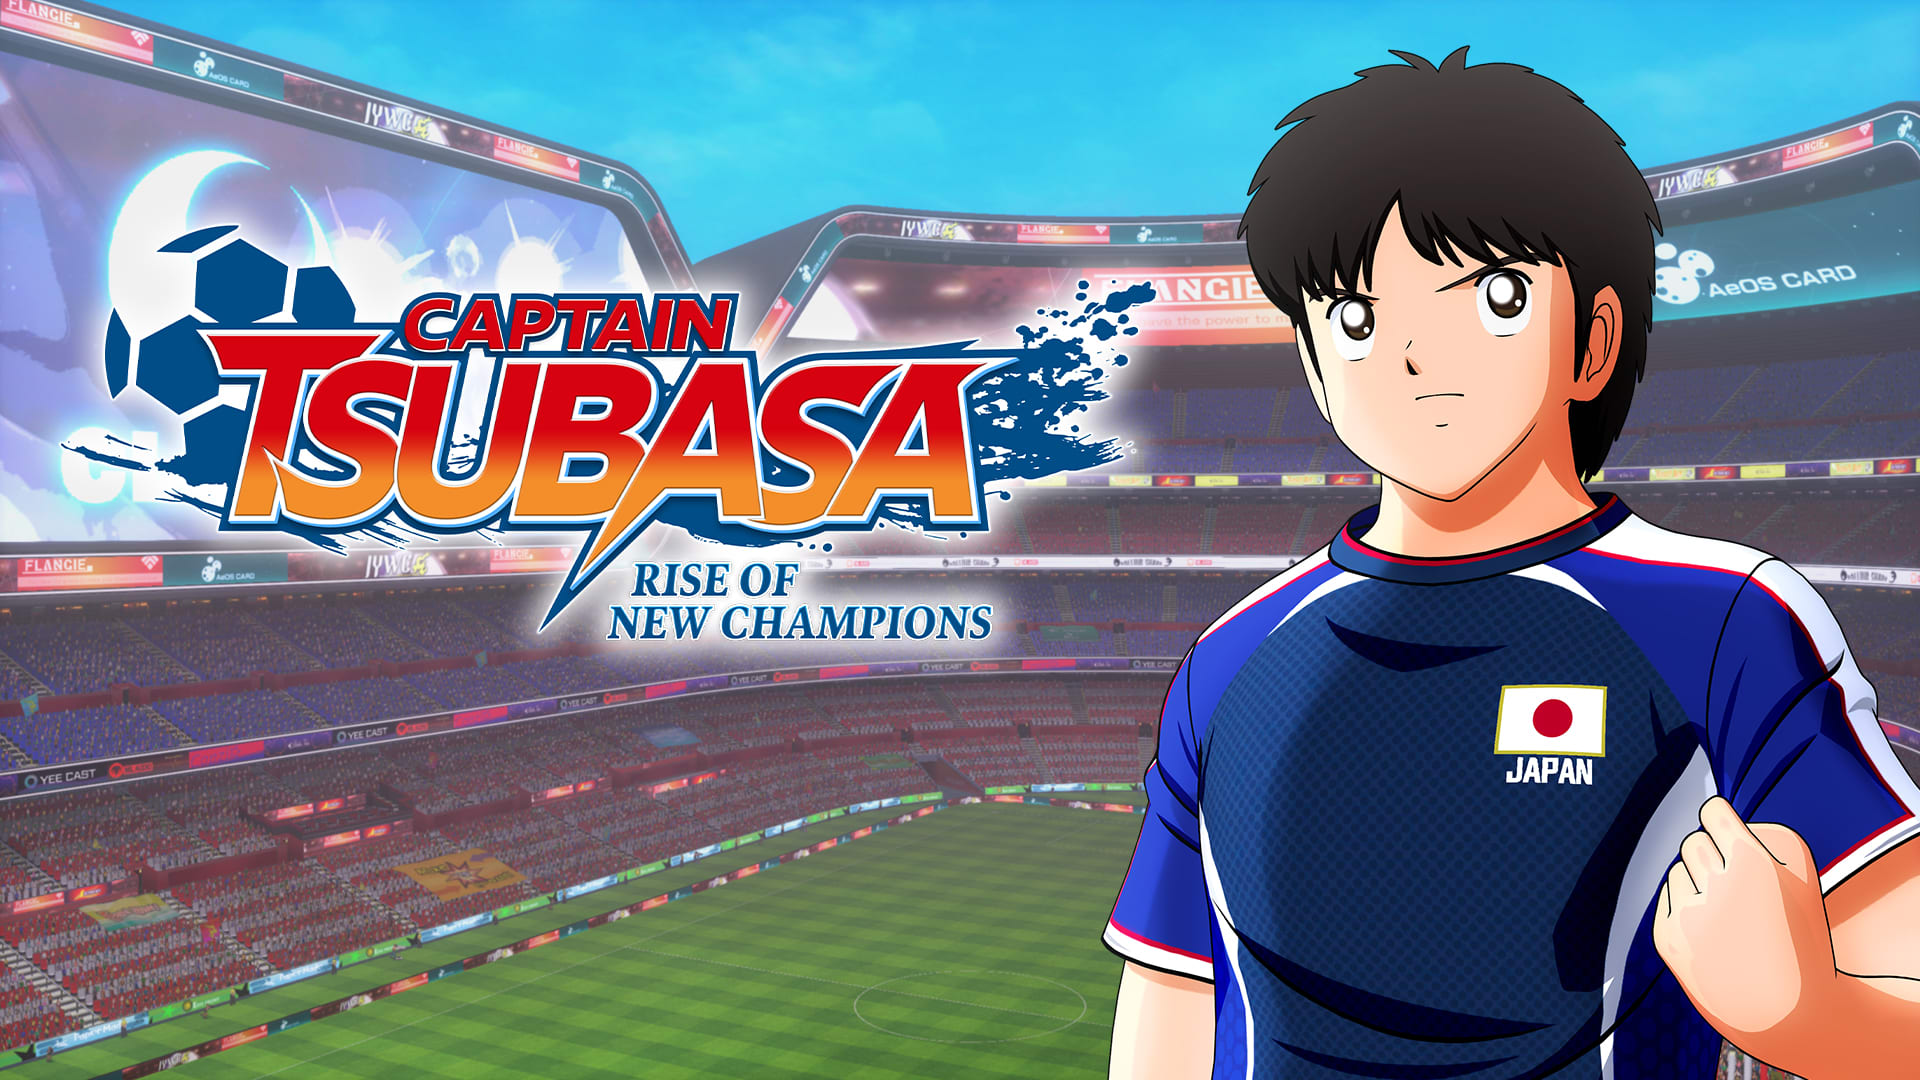 Captain Tsubasa: misión de Taro Misaki en Rise of New Champions 1